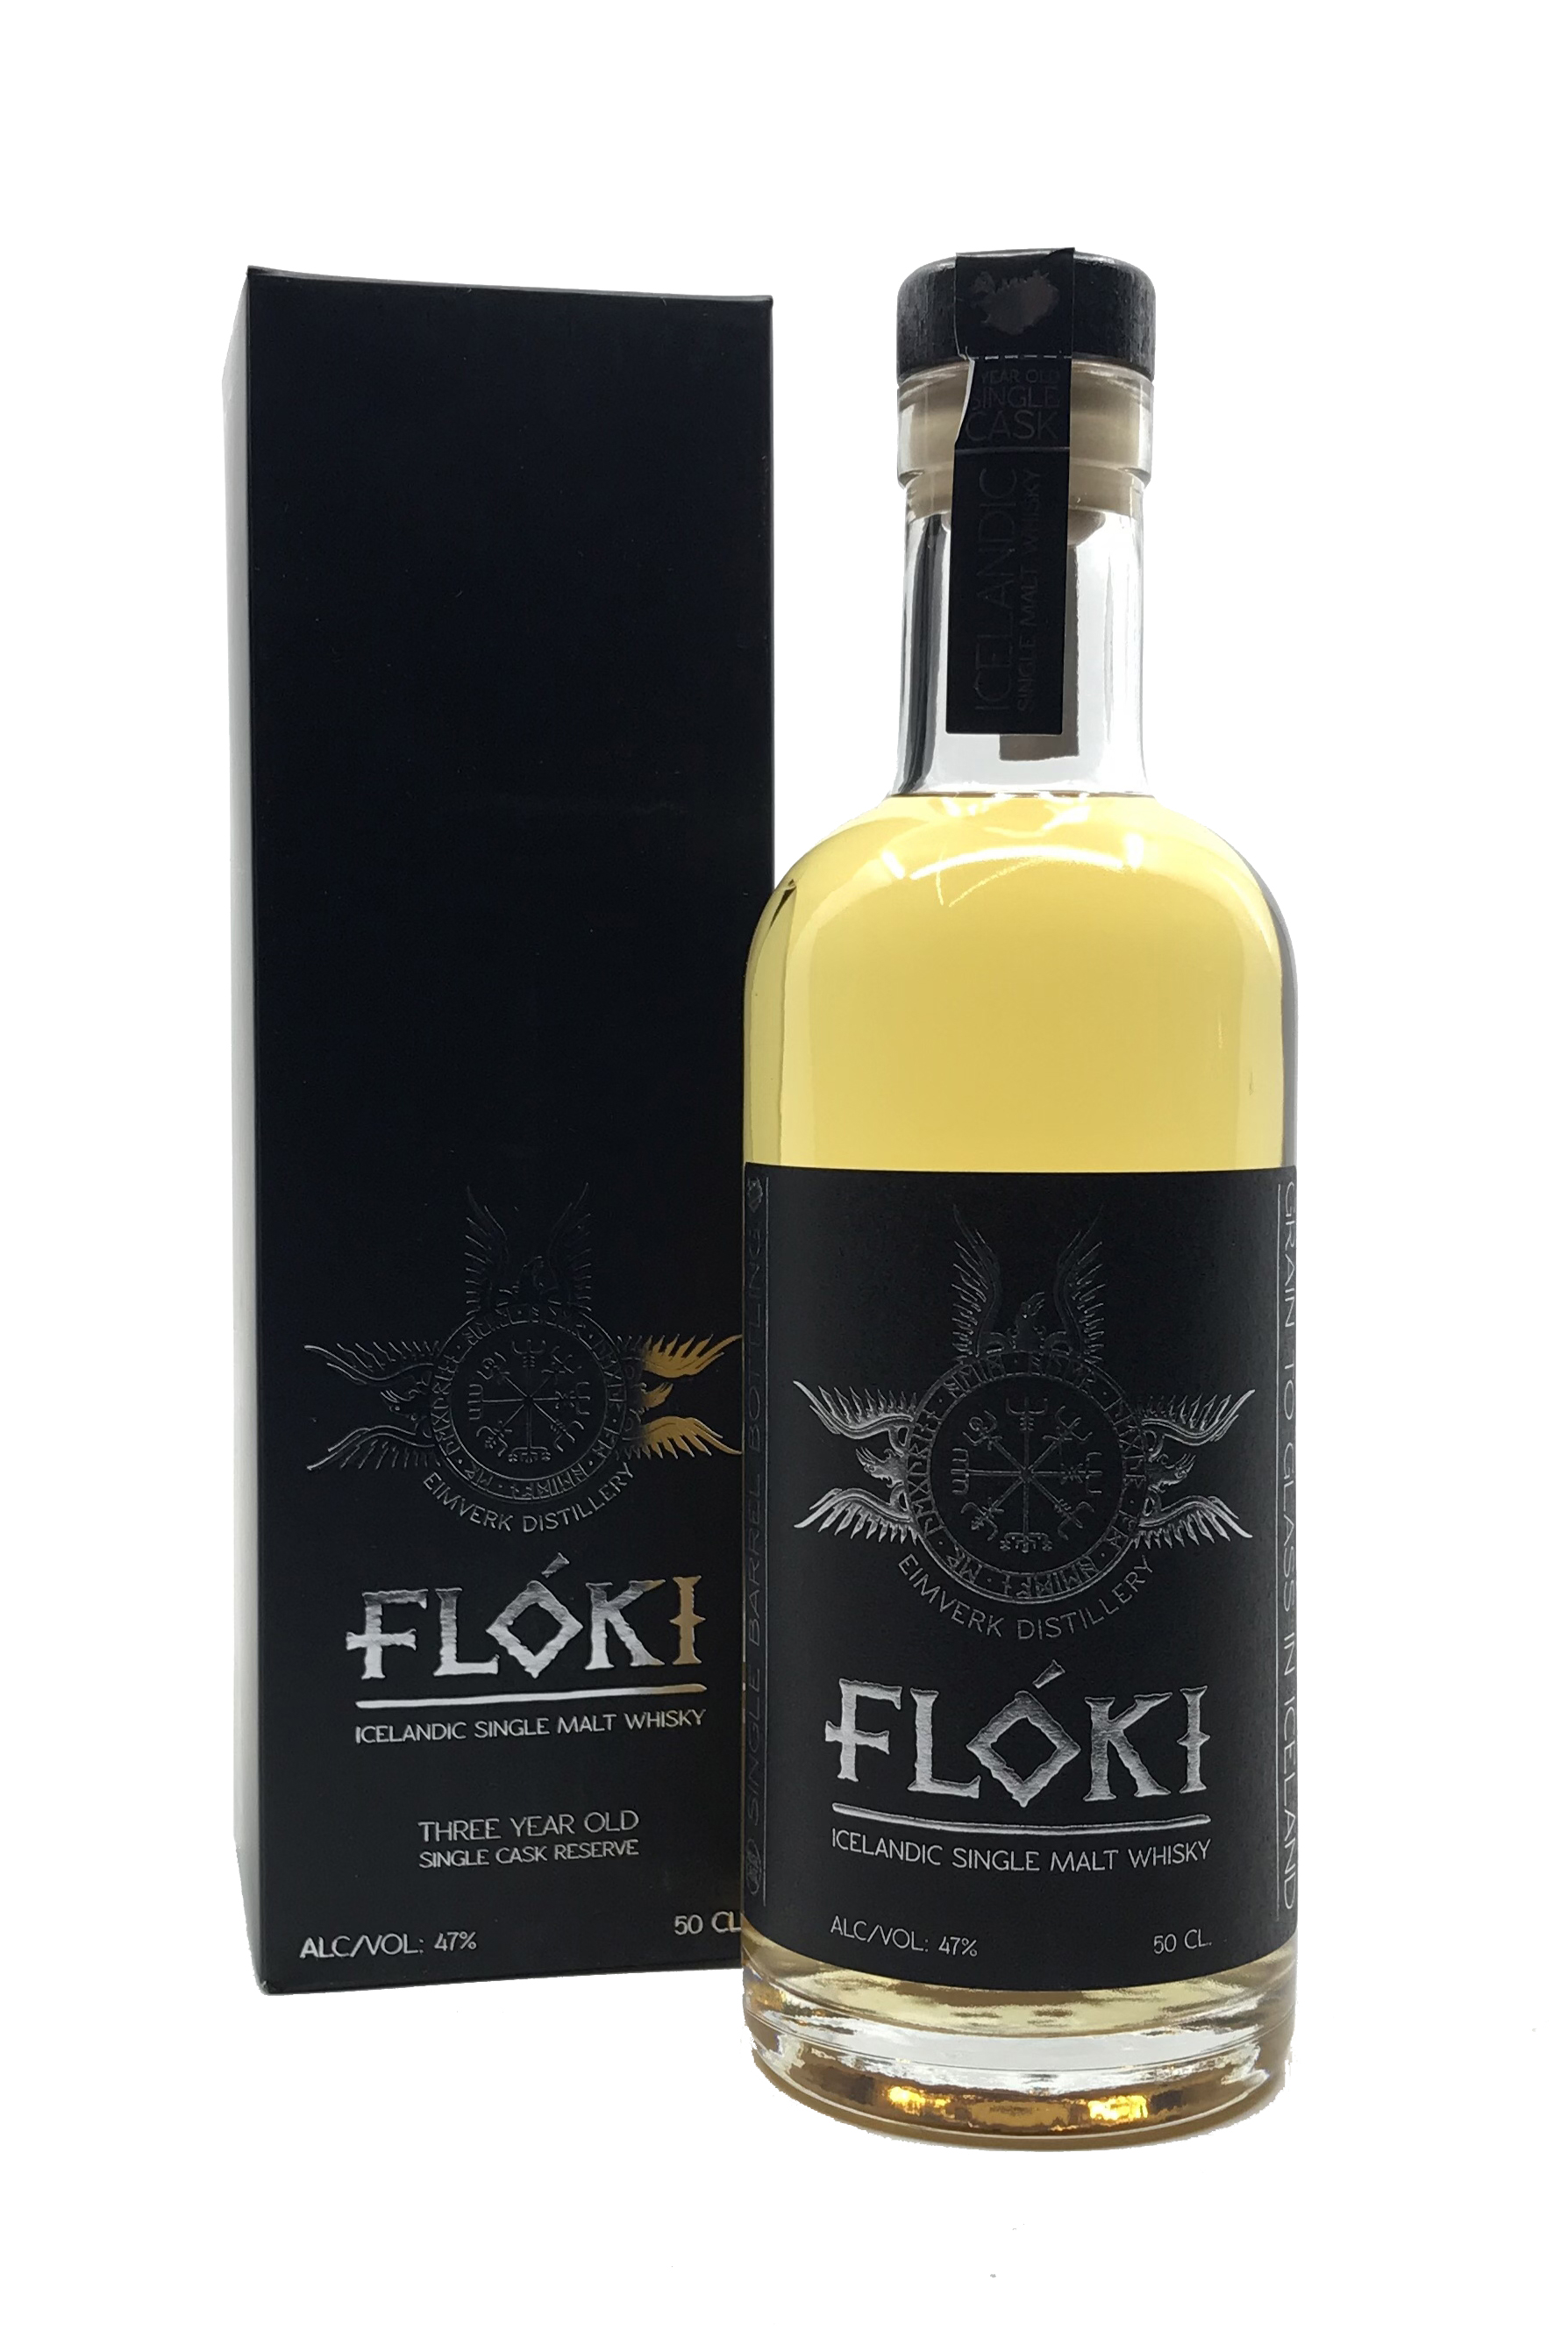 Floki Icelandic Single Malt Whisky - 47% vol. Alk. - 0,5l - Whisky aus Island - Front